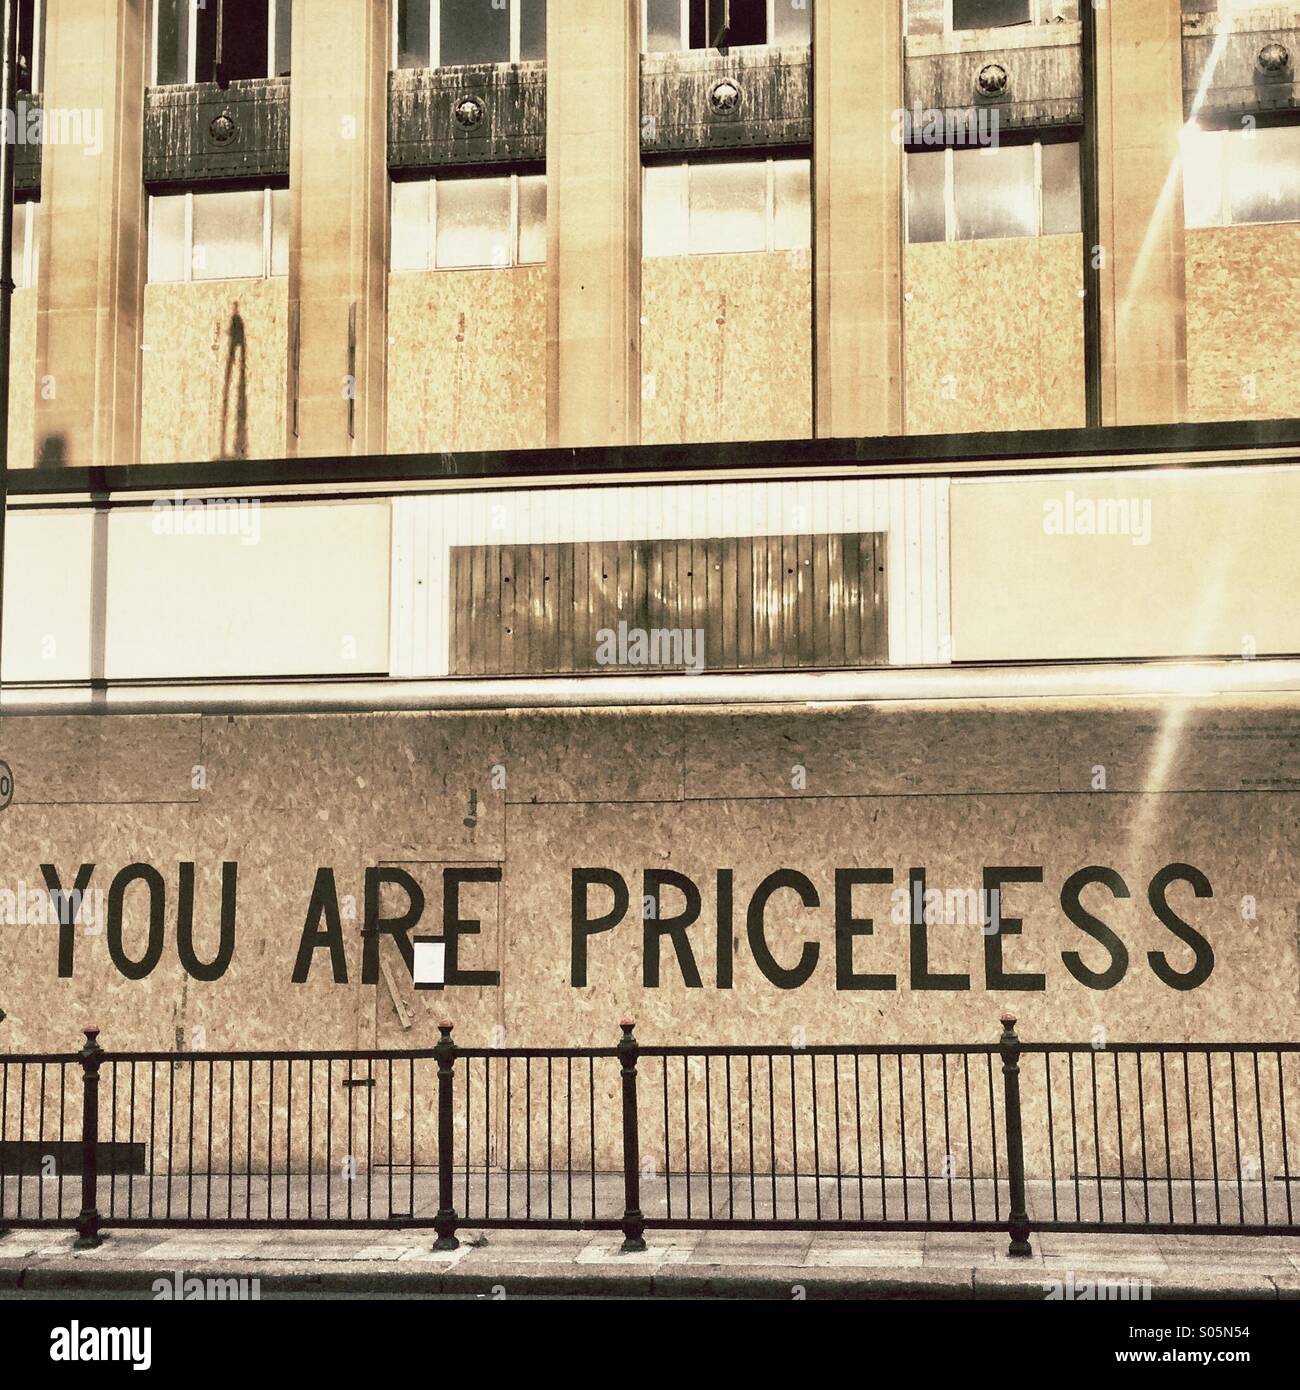 You are priceless graffiti Stock Photo